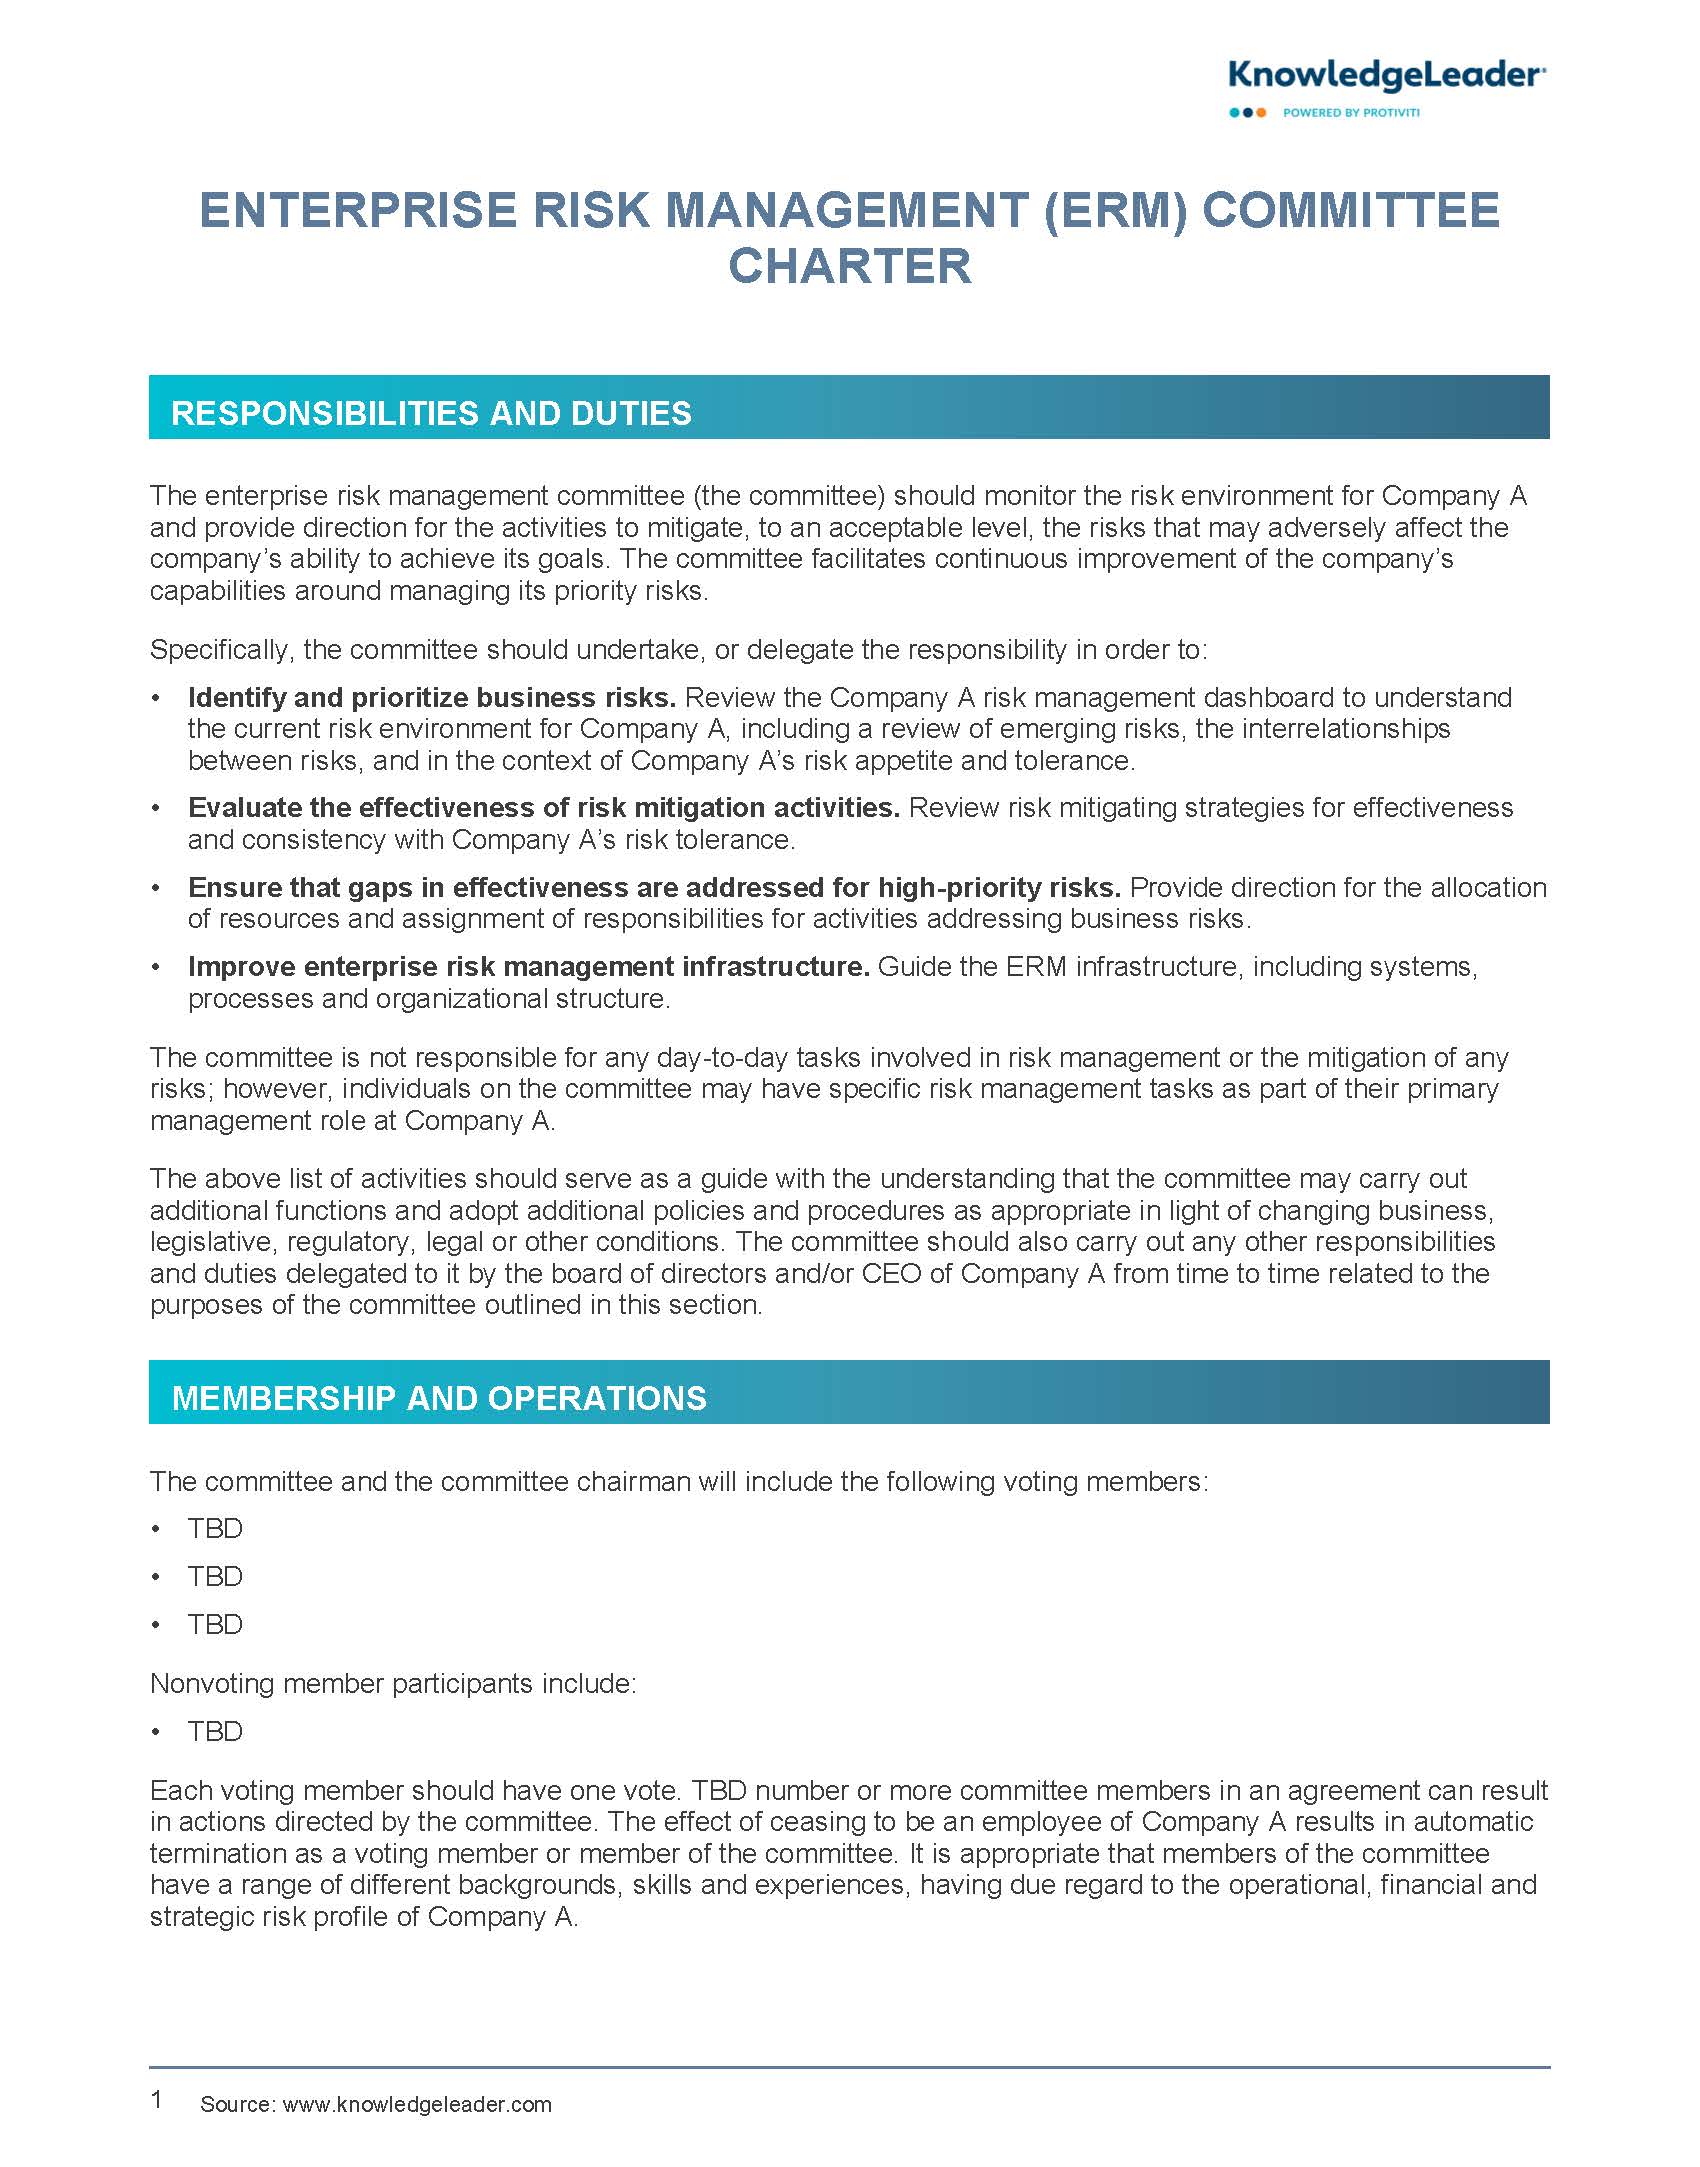 Enterprise Risk Management (ERM) Committee Charter